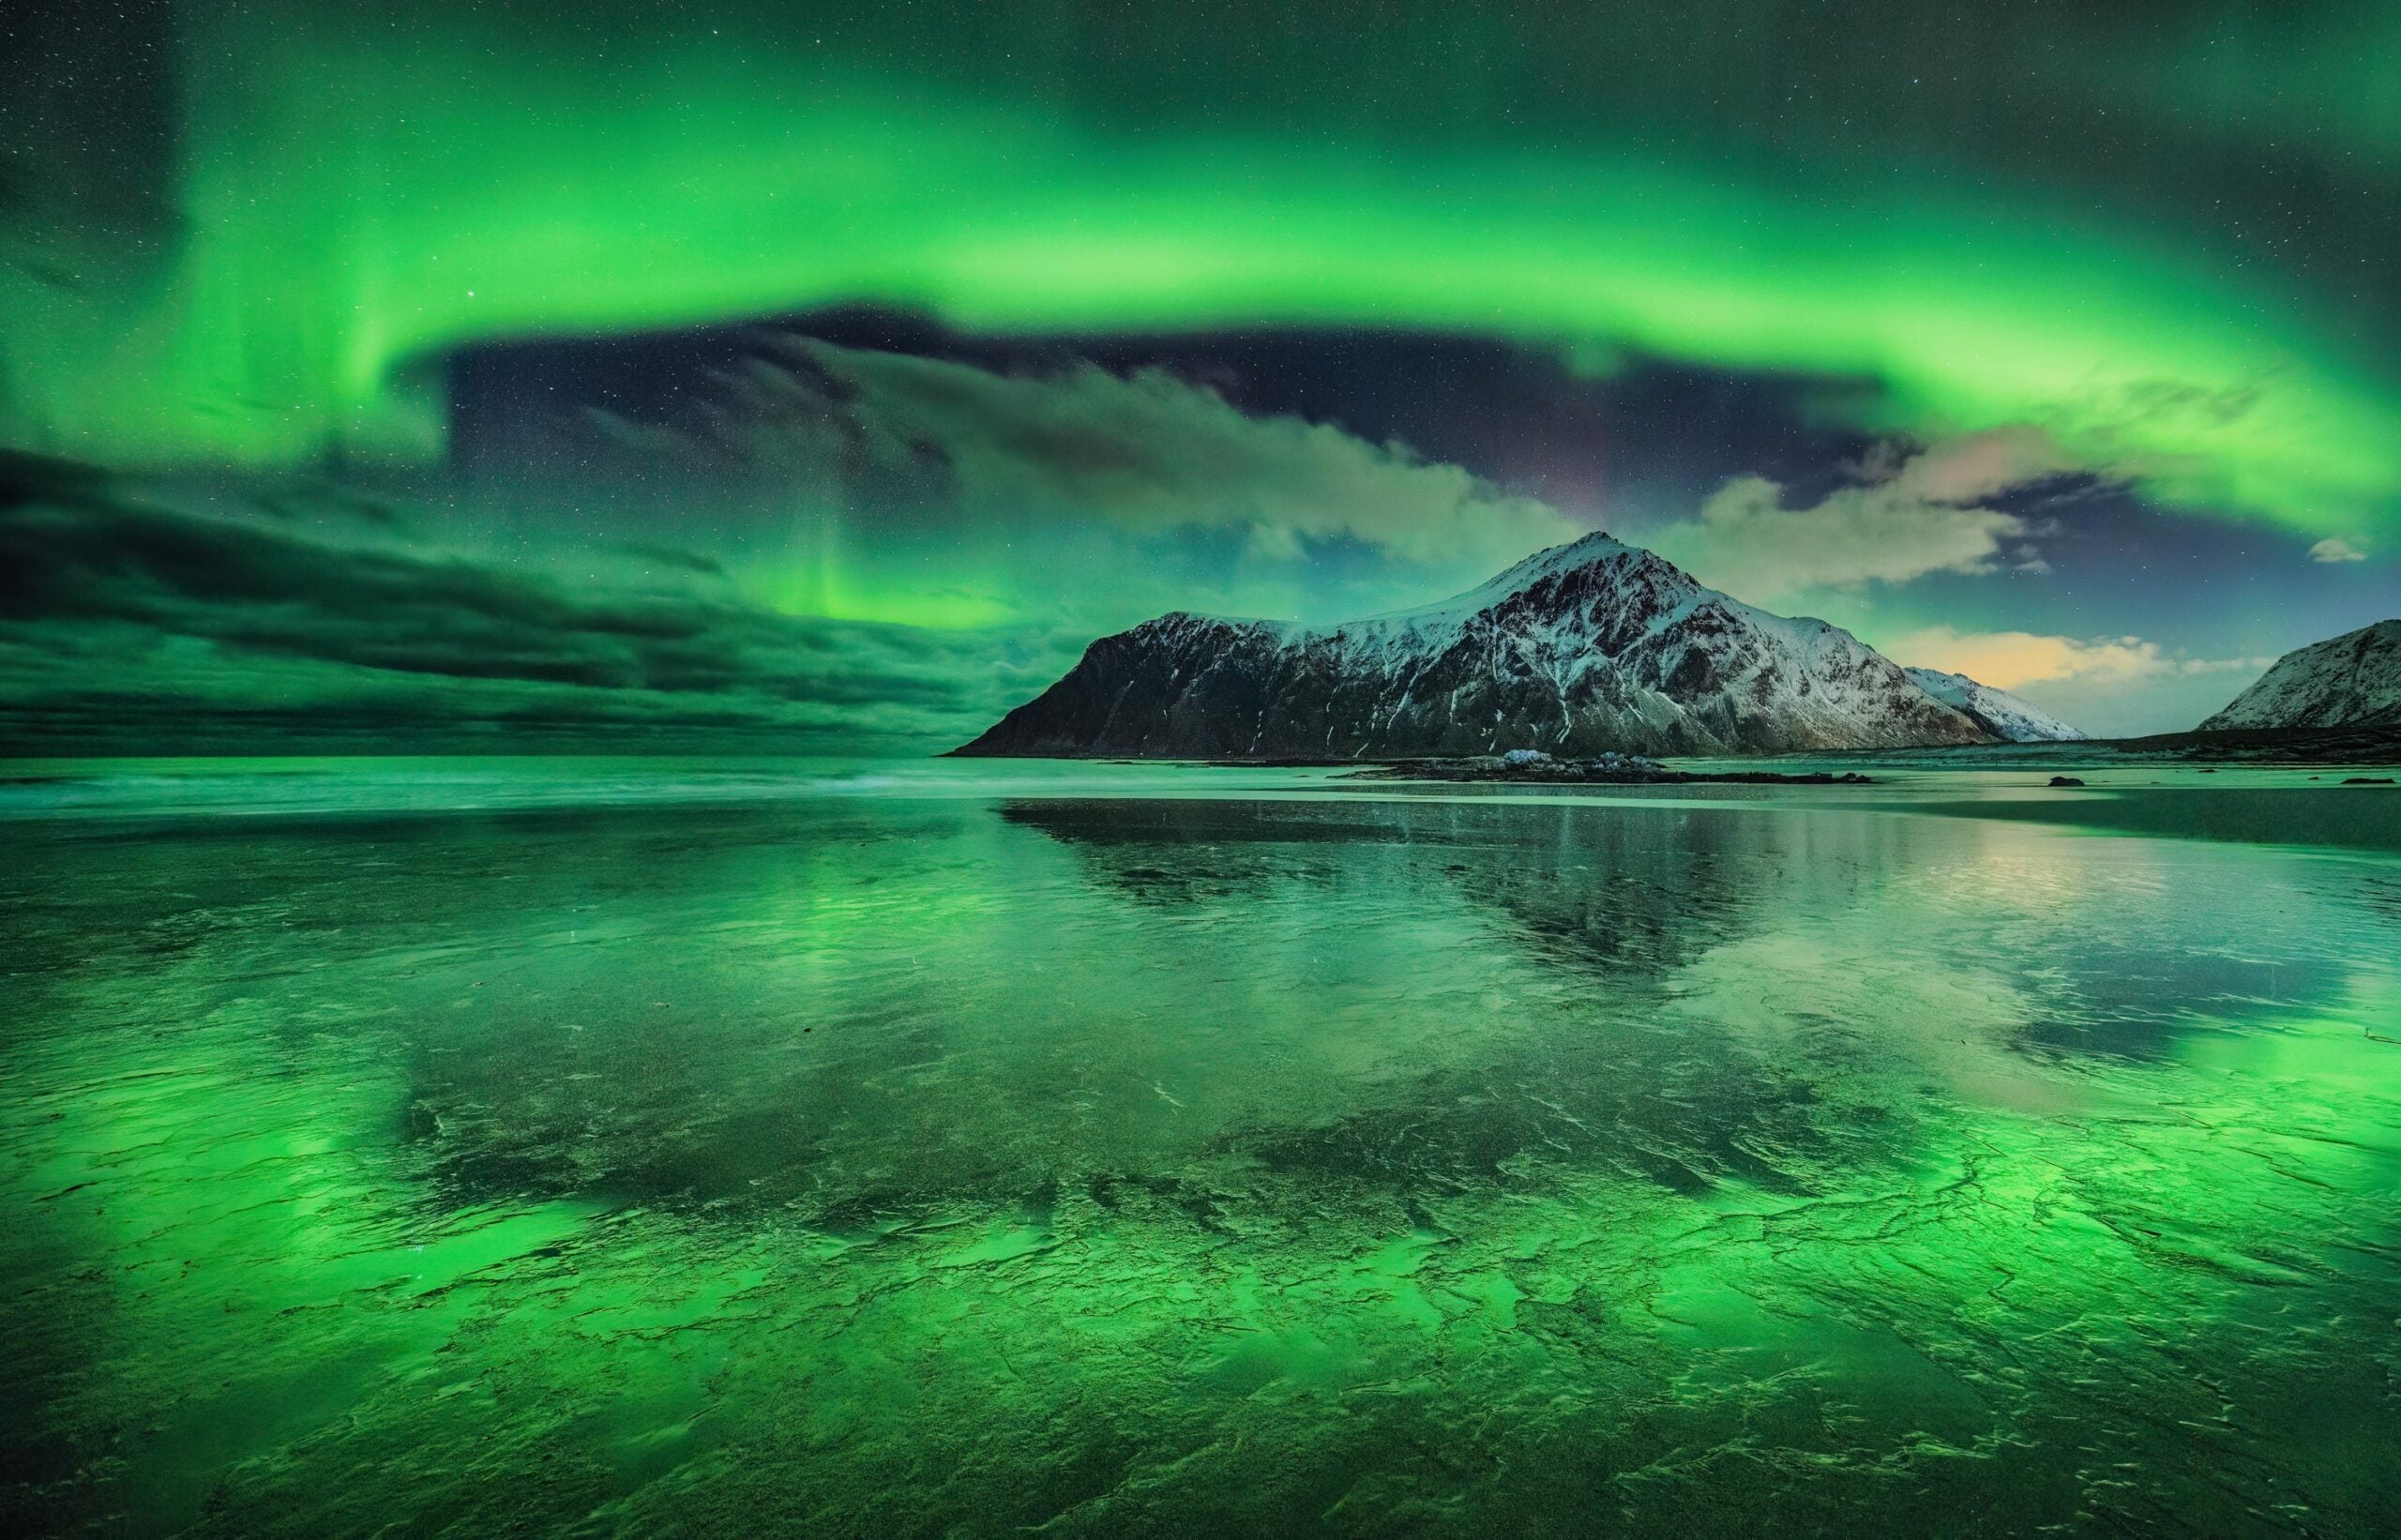 Green aurora encircling a mountain and lake